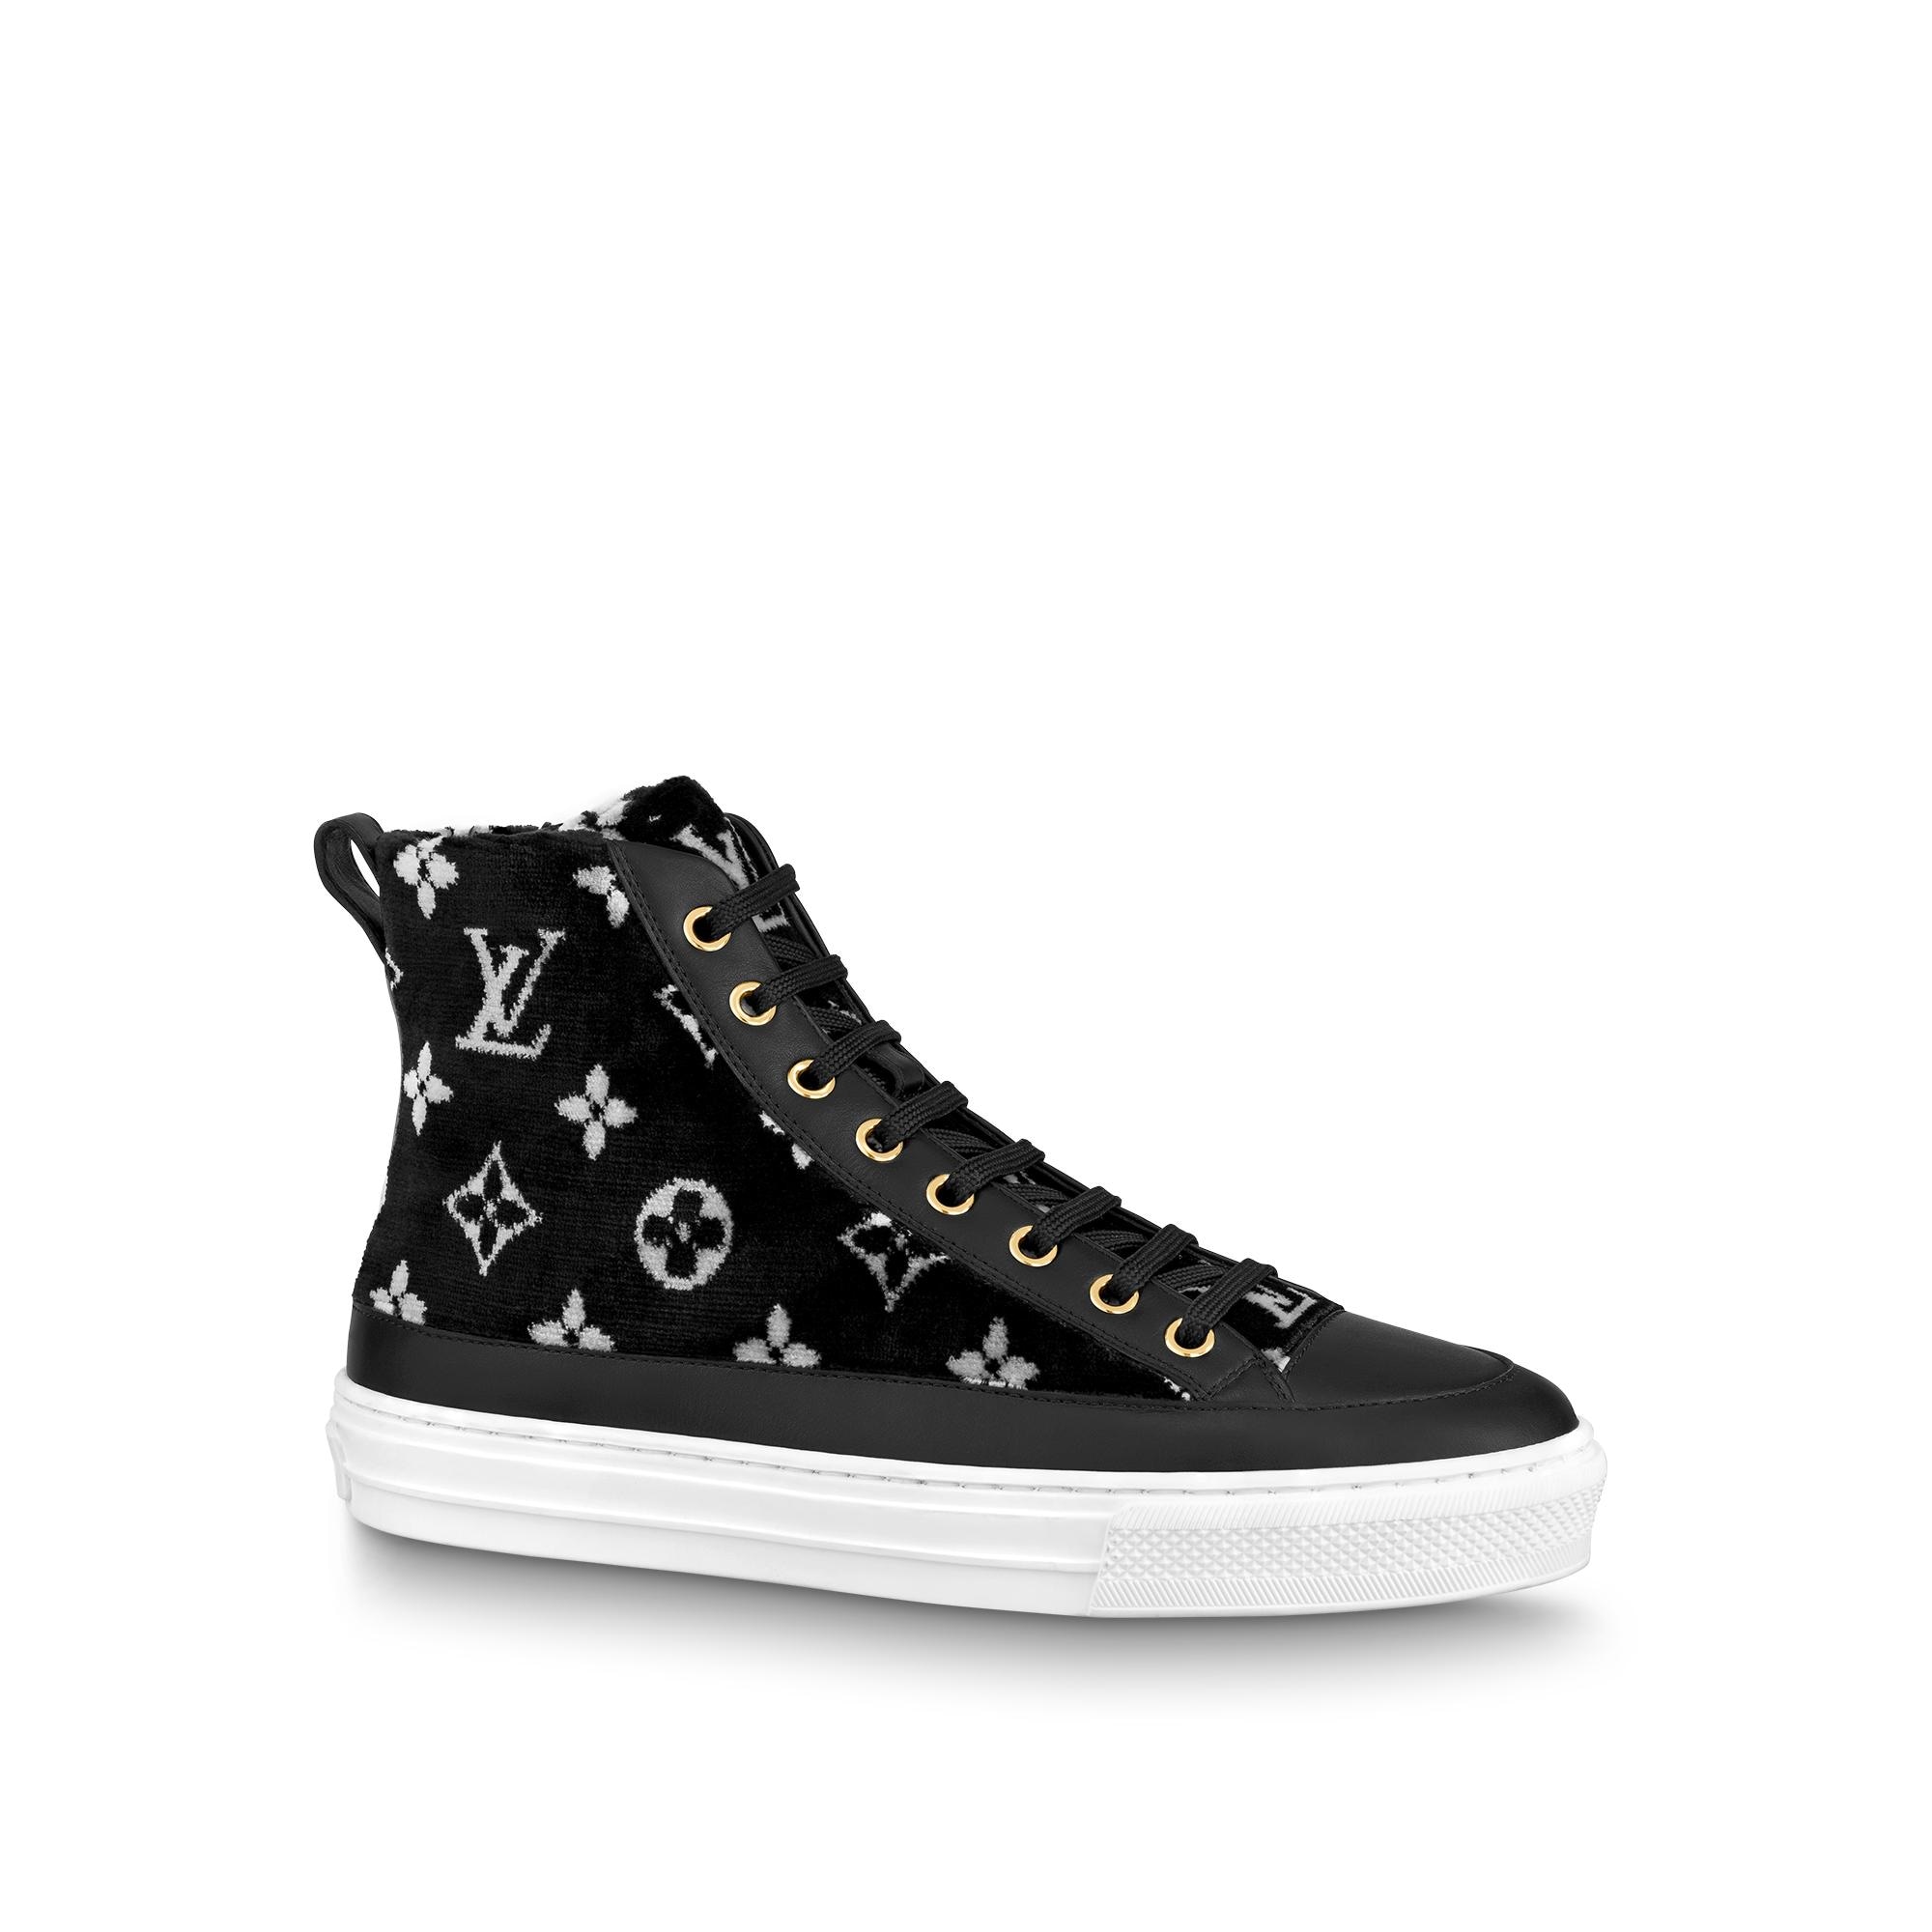 Louis Vuitton Stellar Sneaker Boot in Black - Shoes 1A95ND